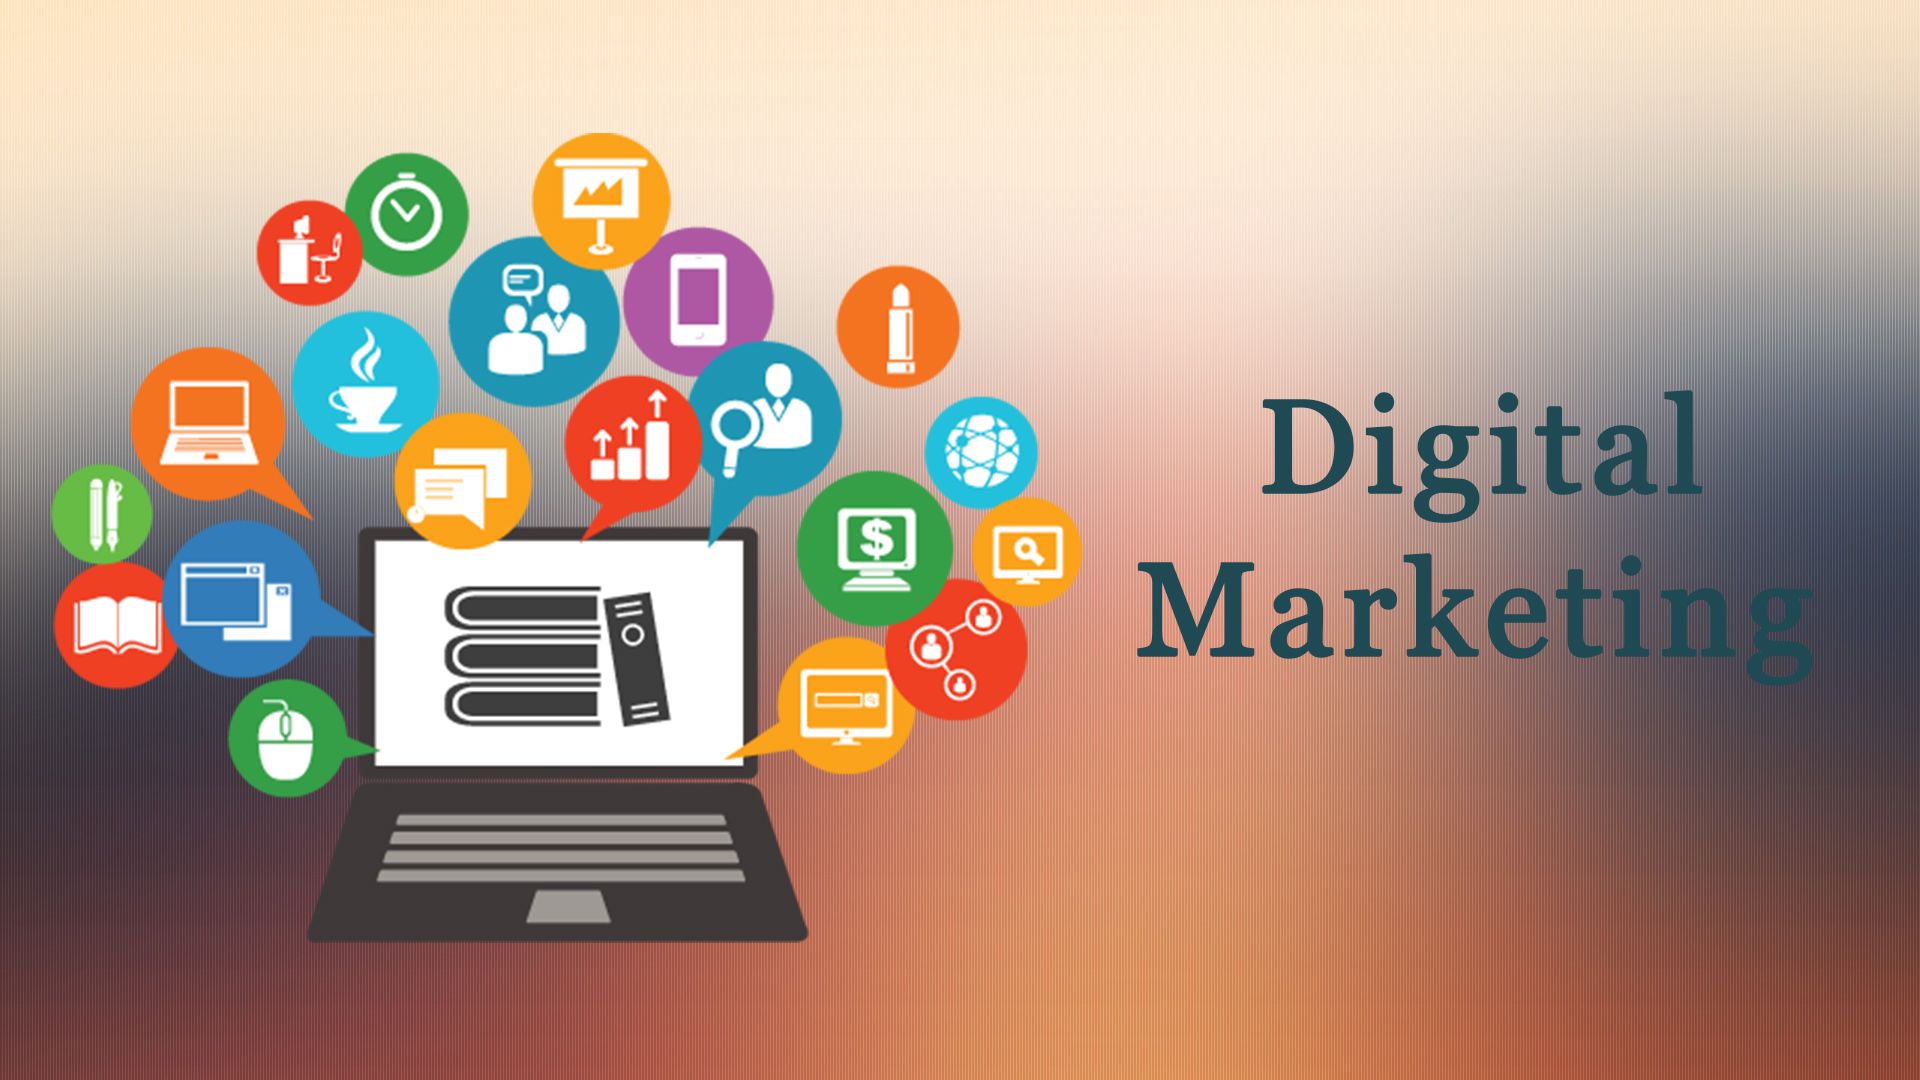 Services of Digital Marketing Companies